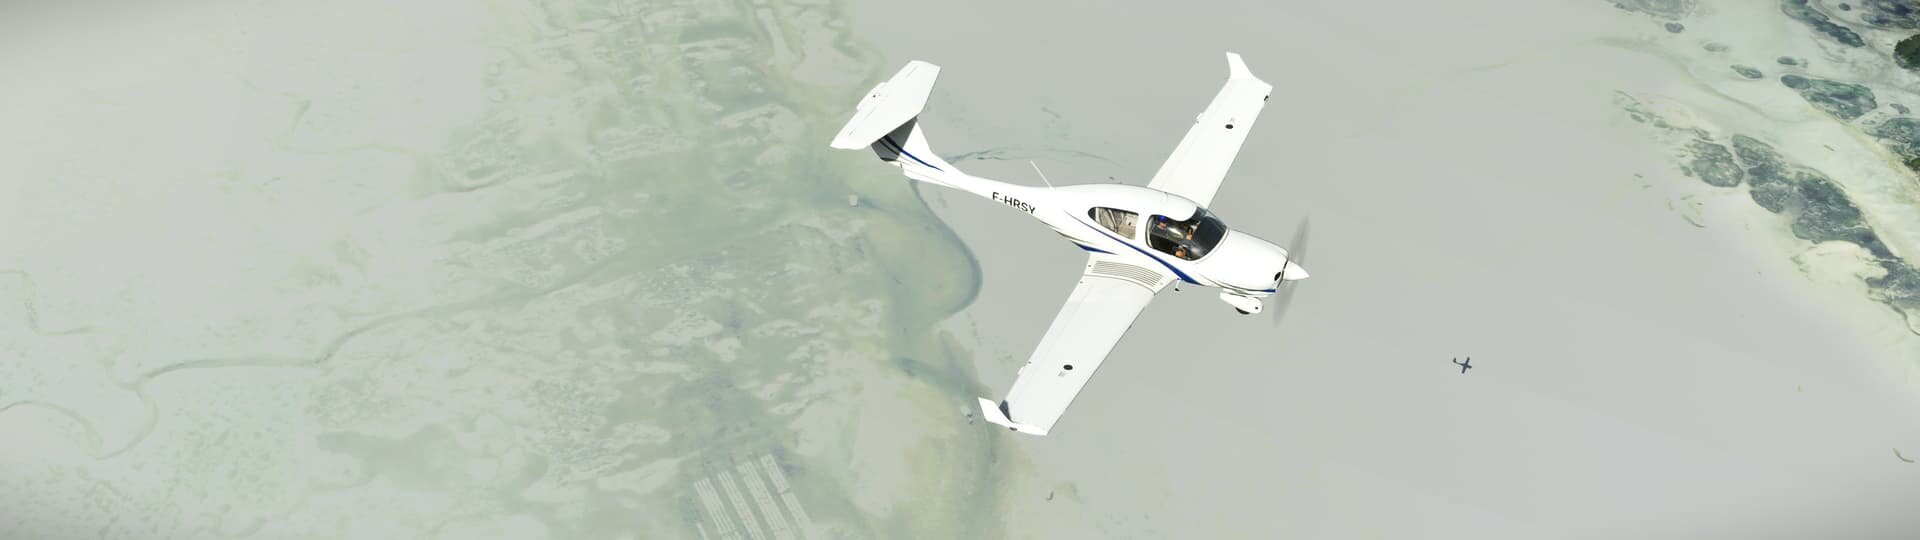 https://image.noelshack.com/fichiers/2023/23/2/1686088424-microsoft-flight-simulator-screenshot-2023-06-06-11-31-56-100.jpg